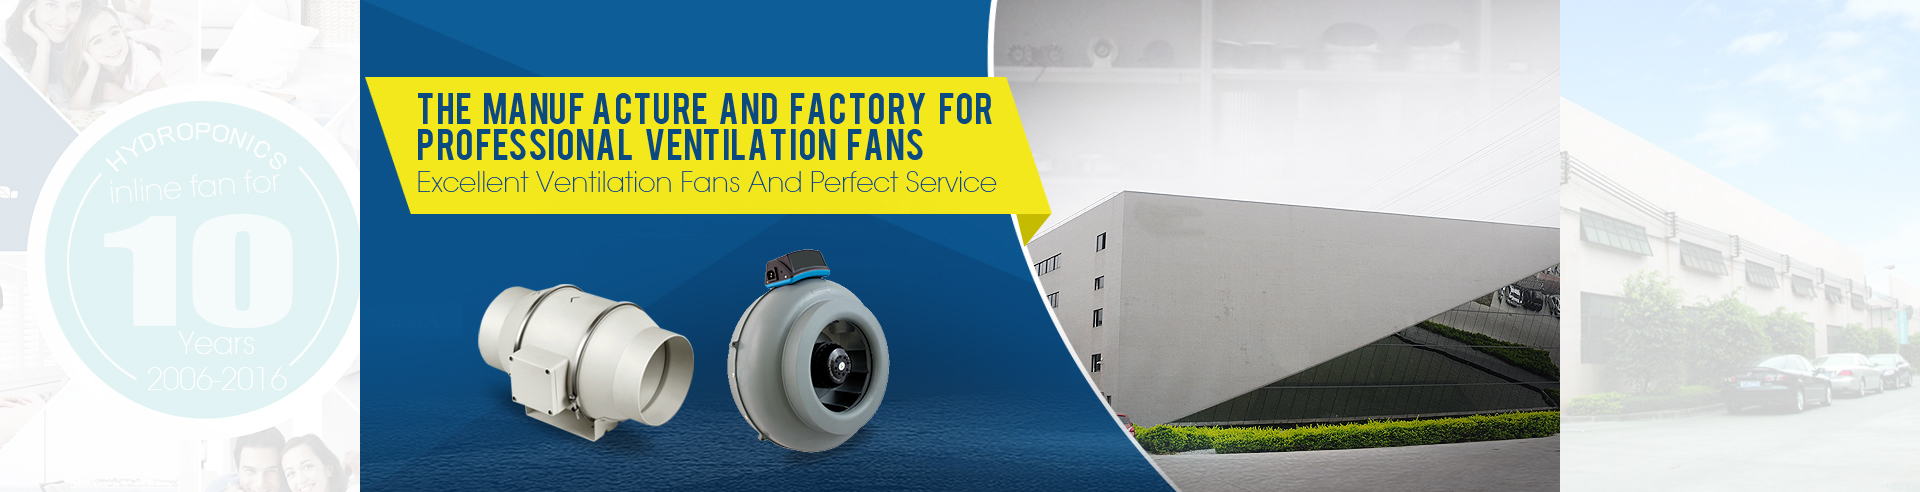 Nussun, ventilation equipment manufacturer